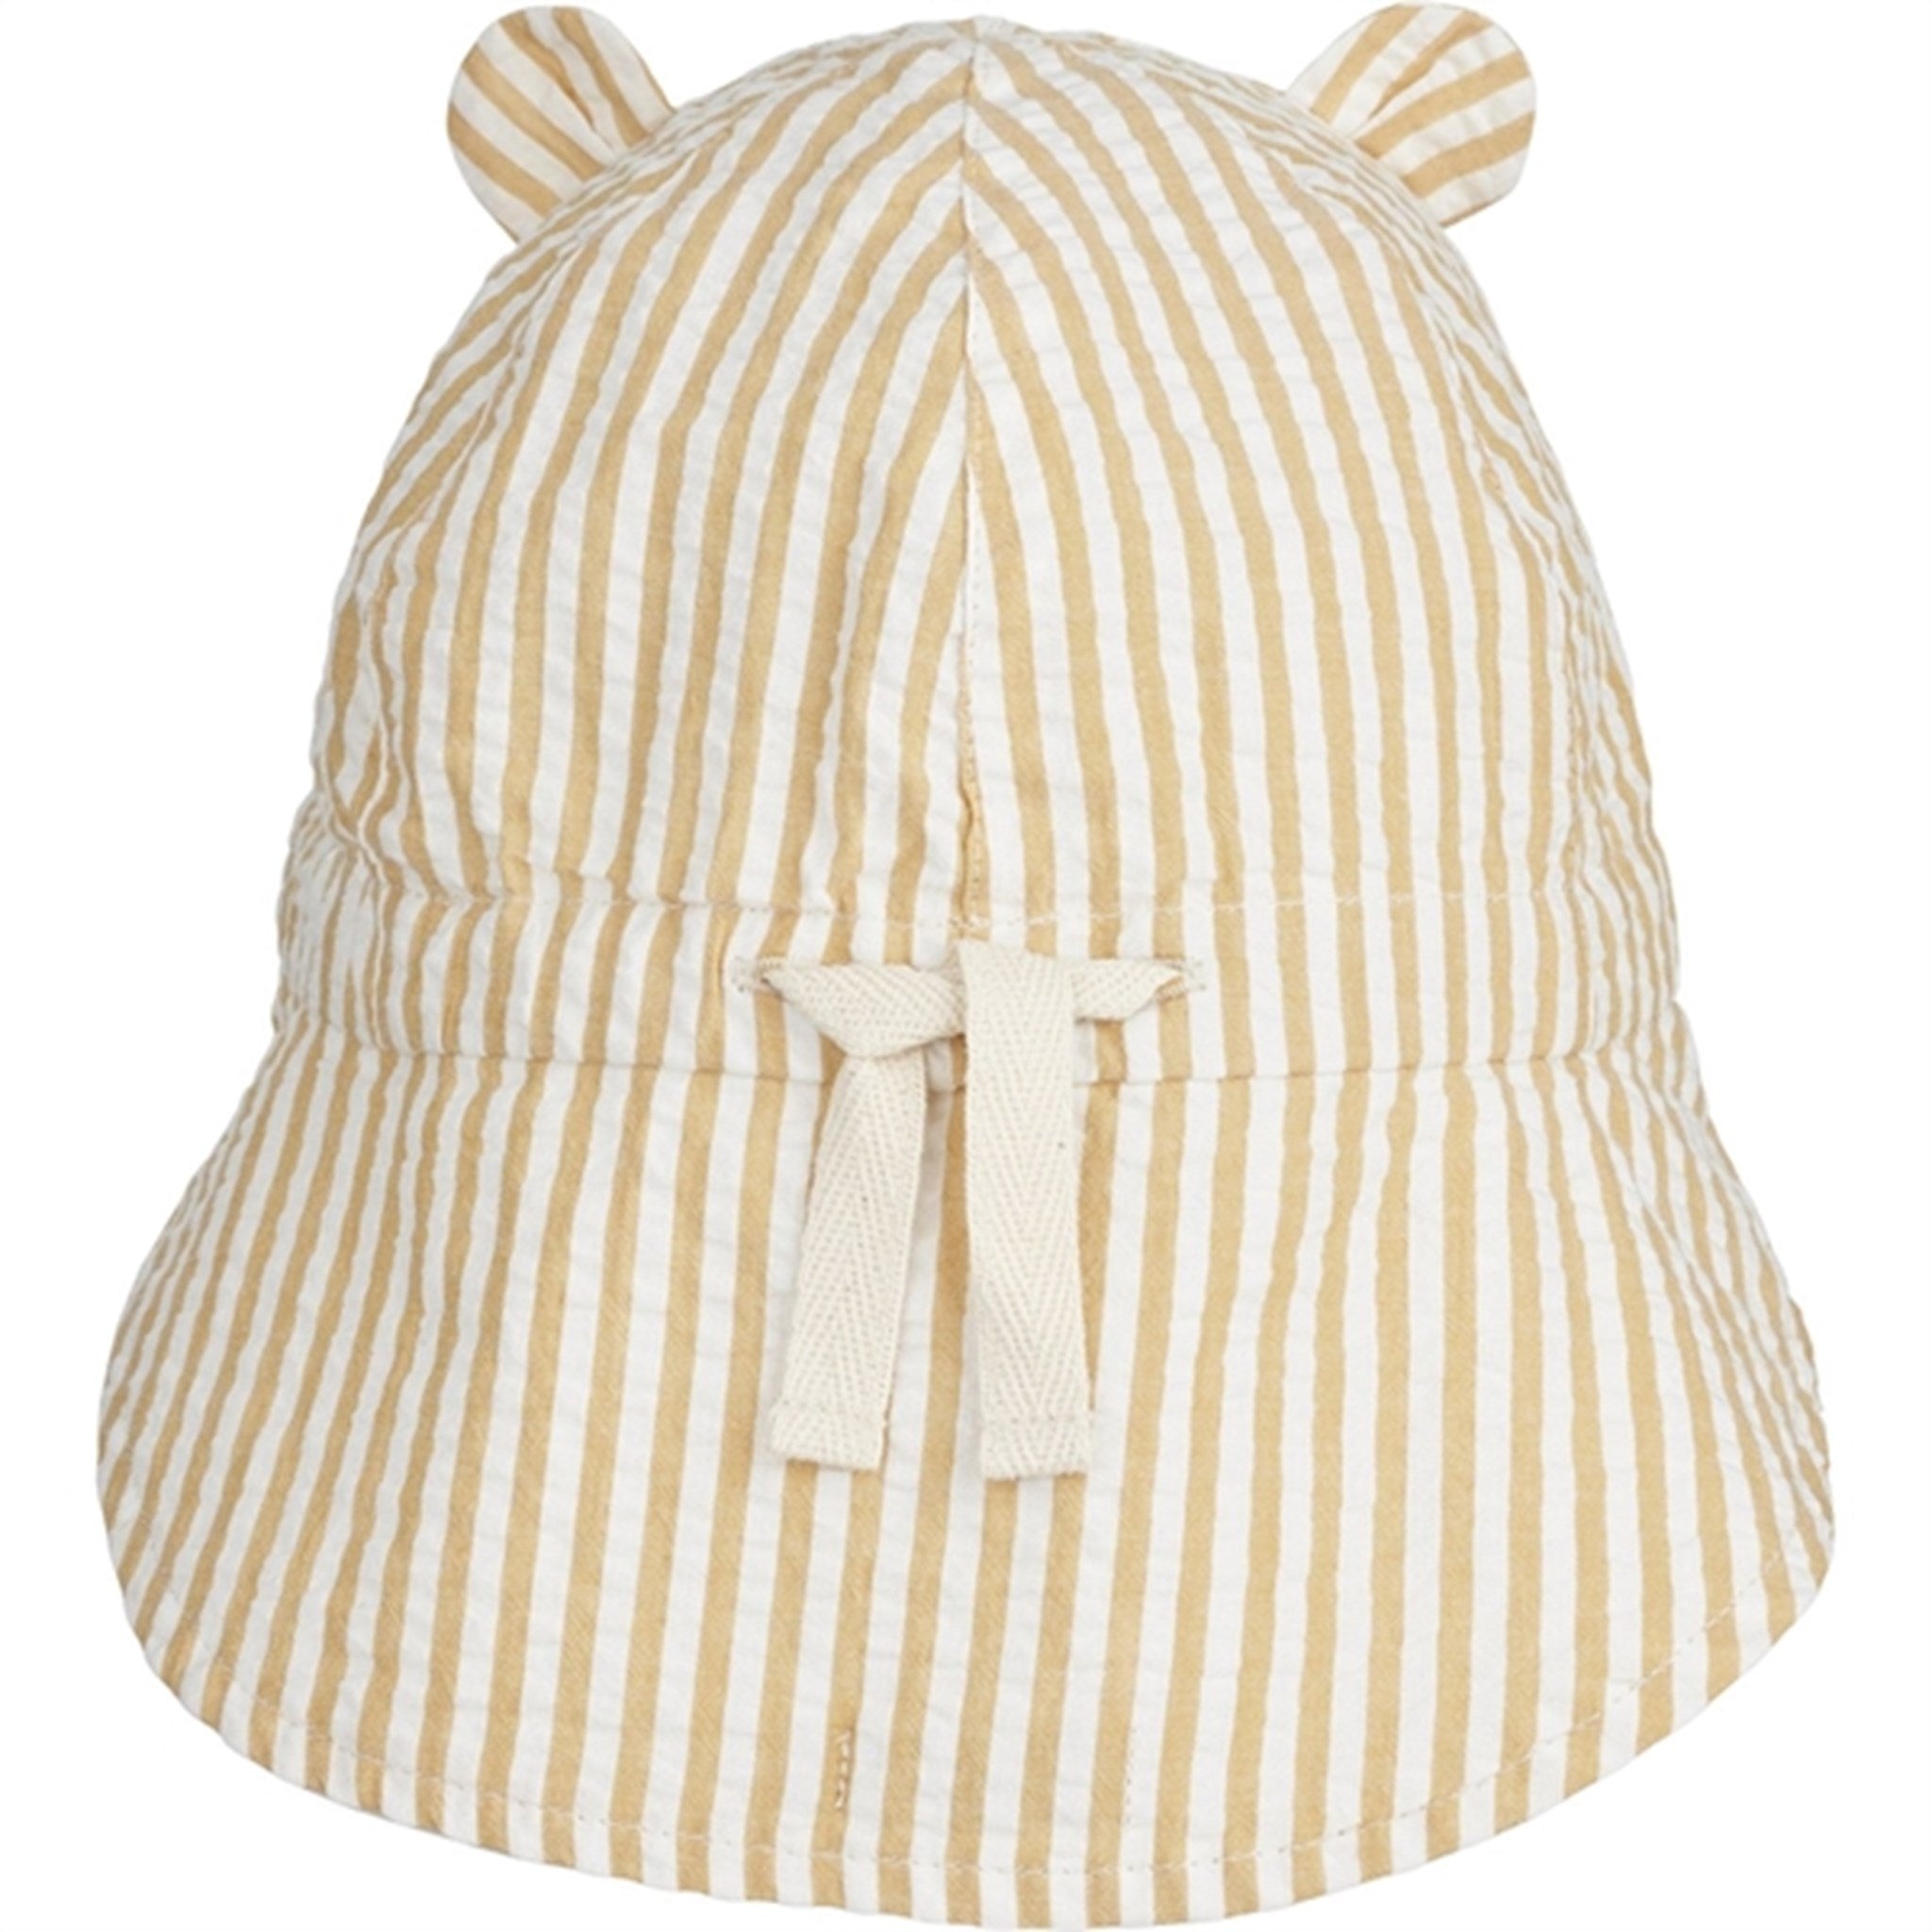 Liewood Gorm Sun Hat Stripe Yellow Mellow/Créme 2